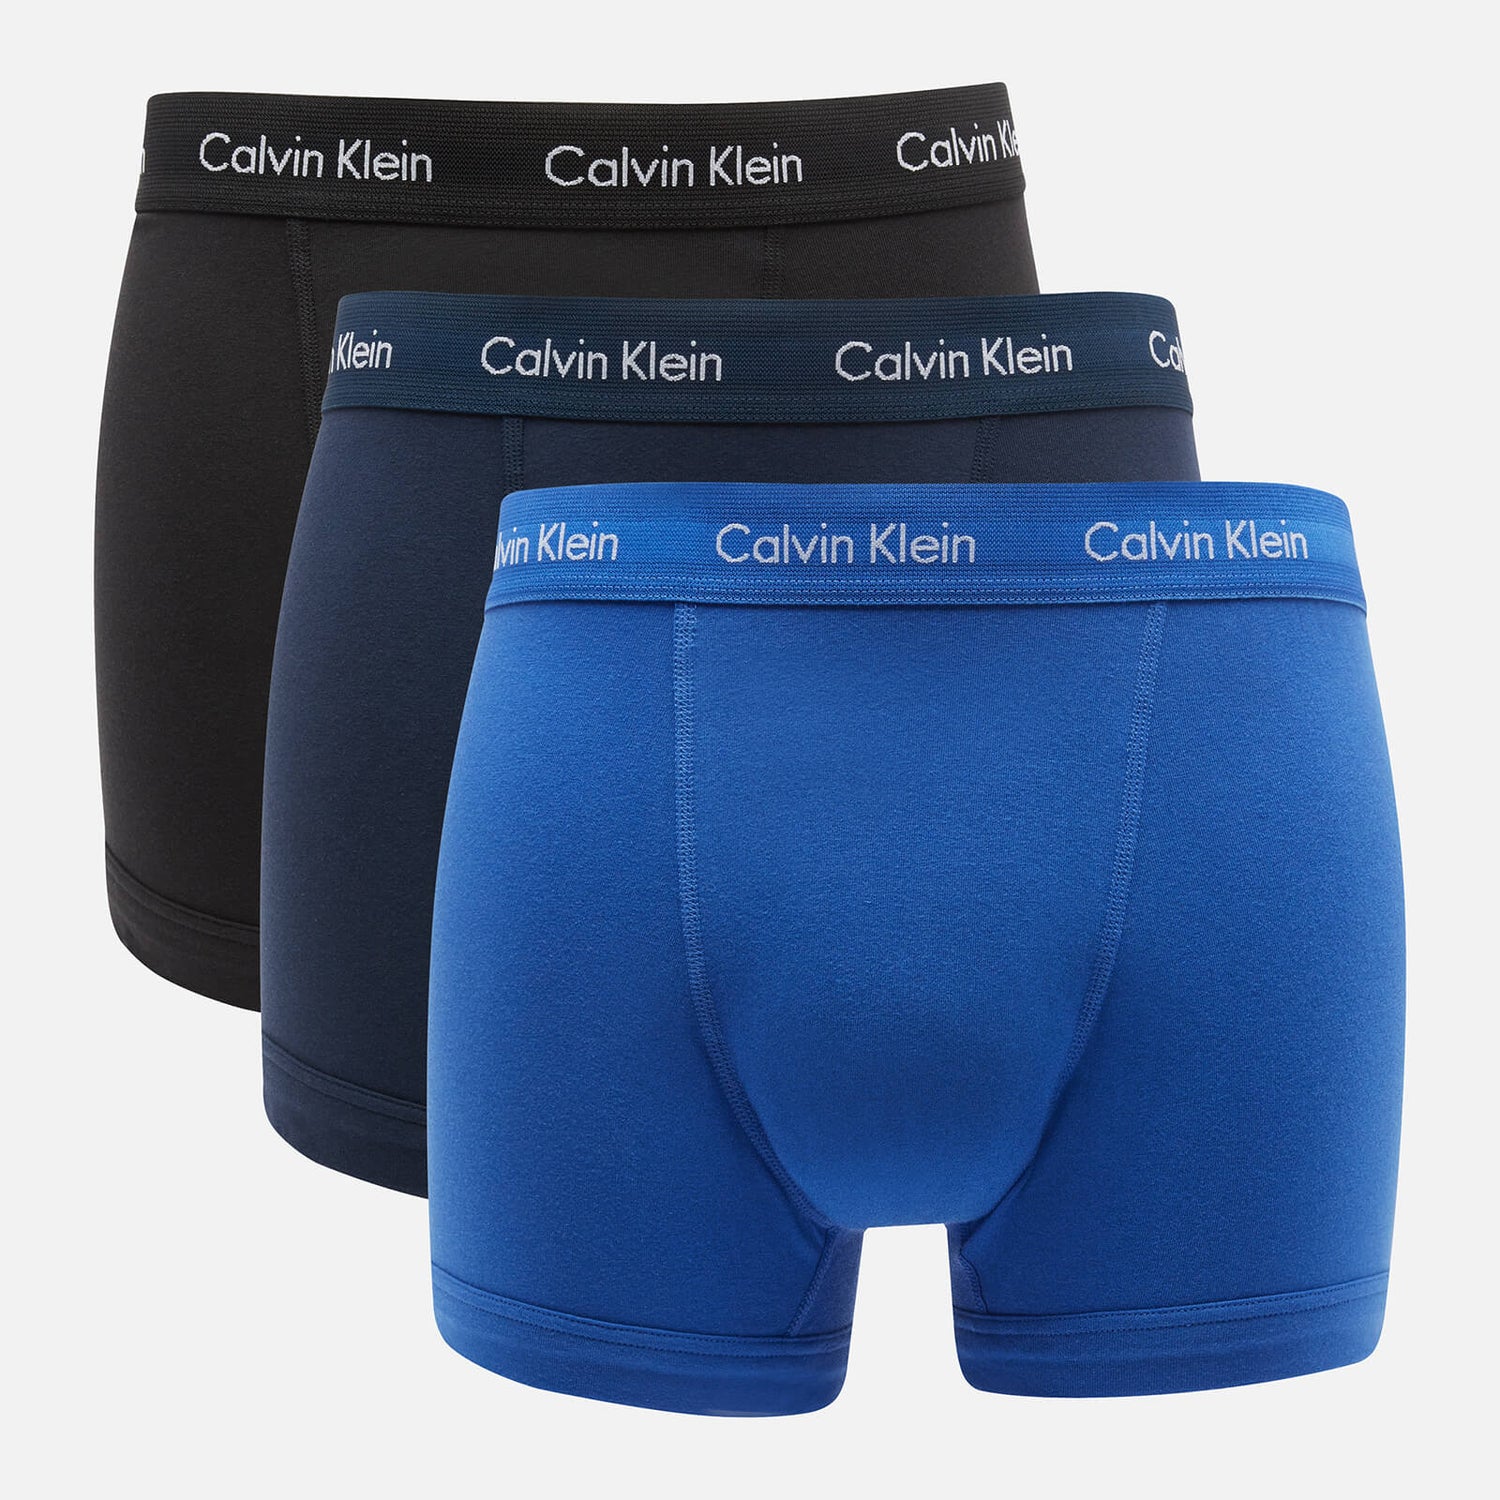 Calvin Klein Men's Cotton Stretch 3-Pack Trunks - Black/Blue/Blue - S